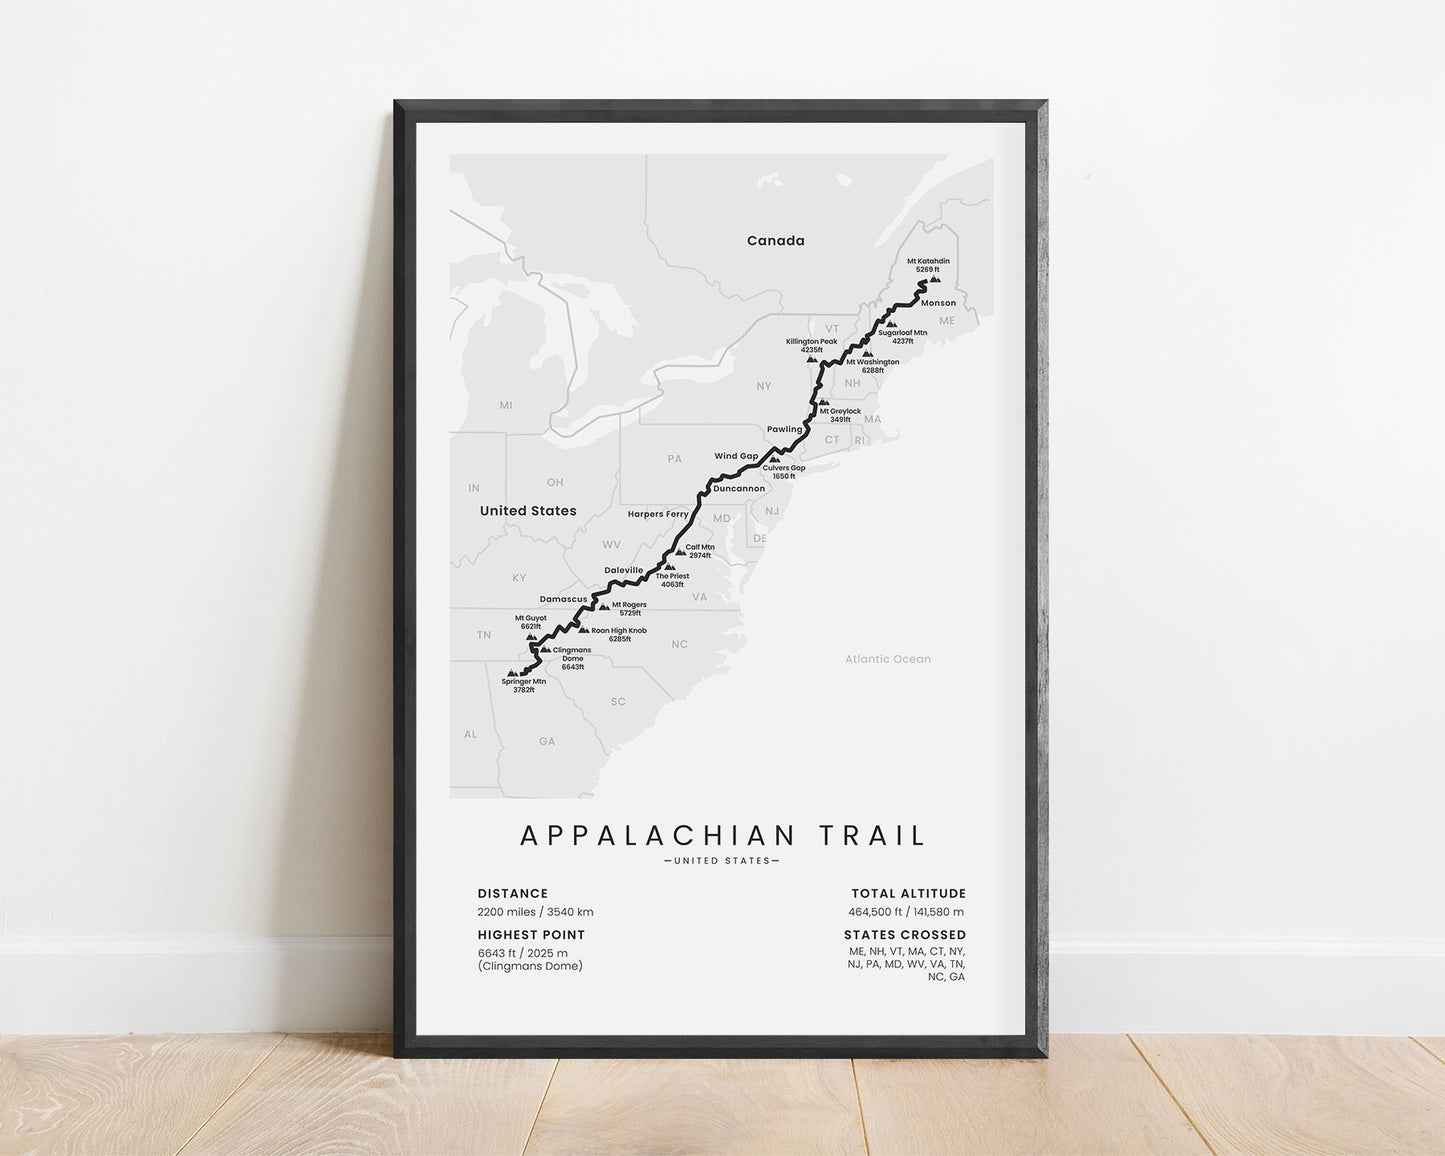 Appalachian Trail United States thru-hike map with white background